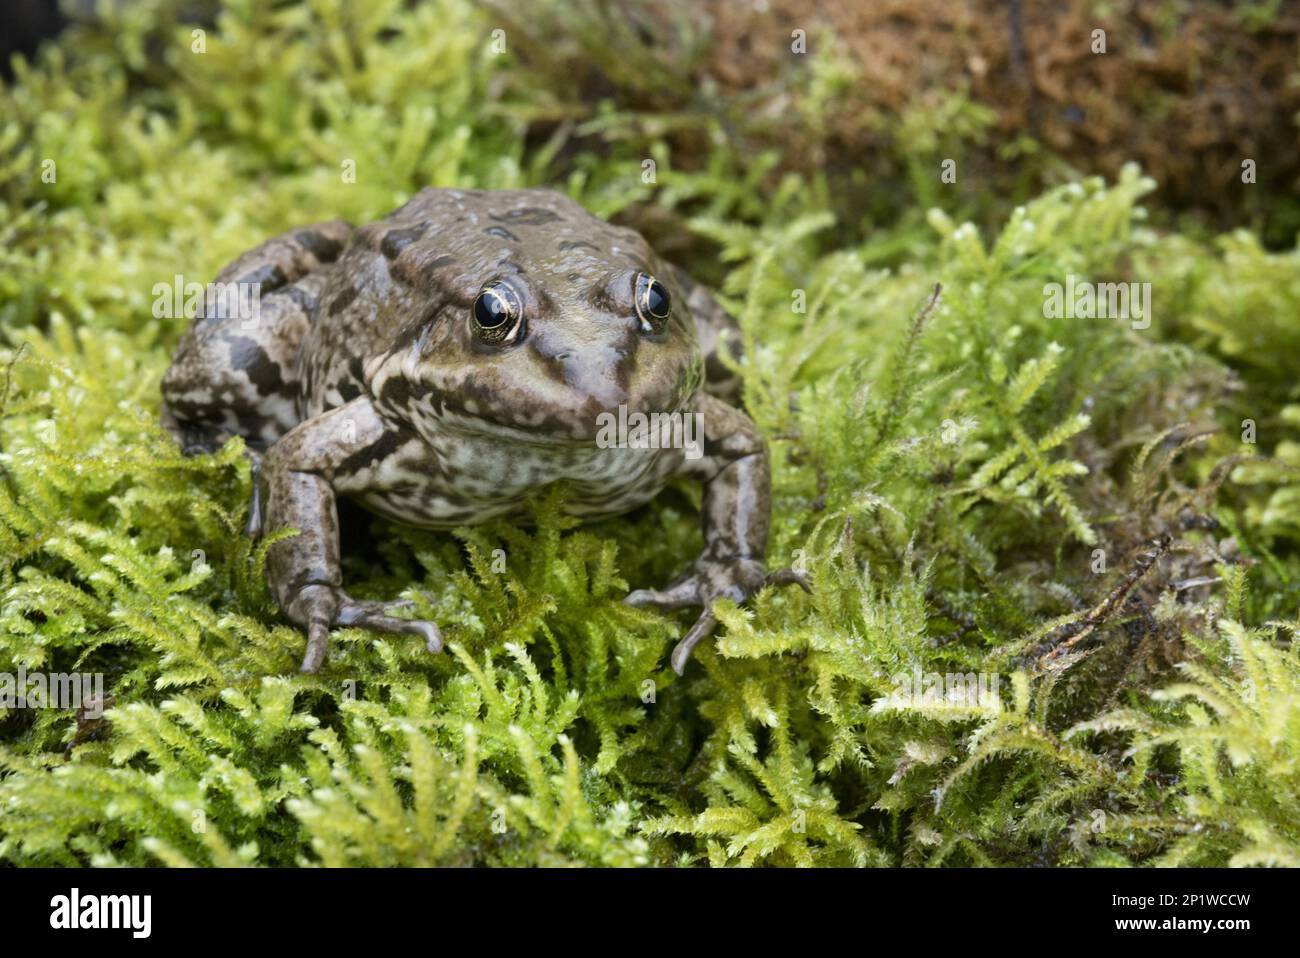 Marsh Frog (Pelophylax ridibundus) introduced species, adult, sitting on moss, England, United Kingdom Stock Photo